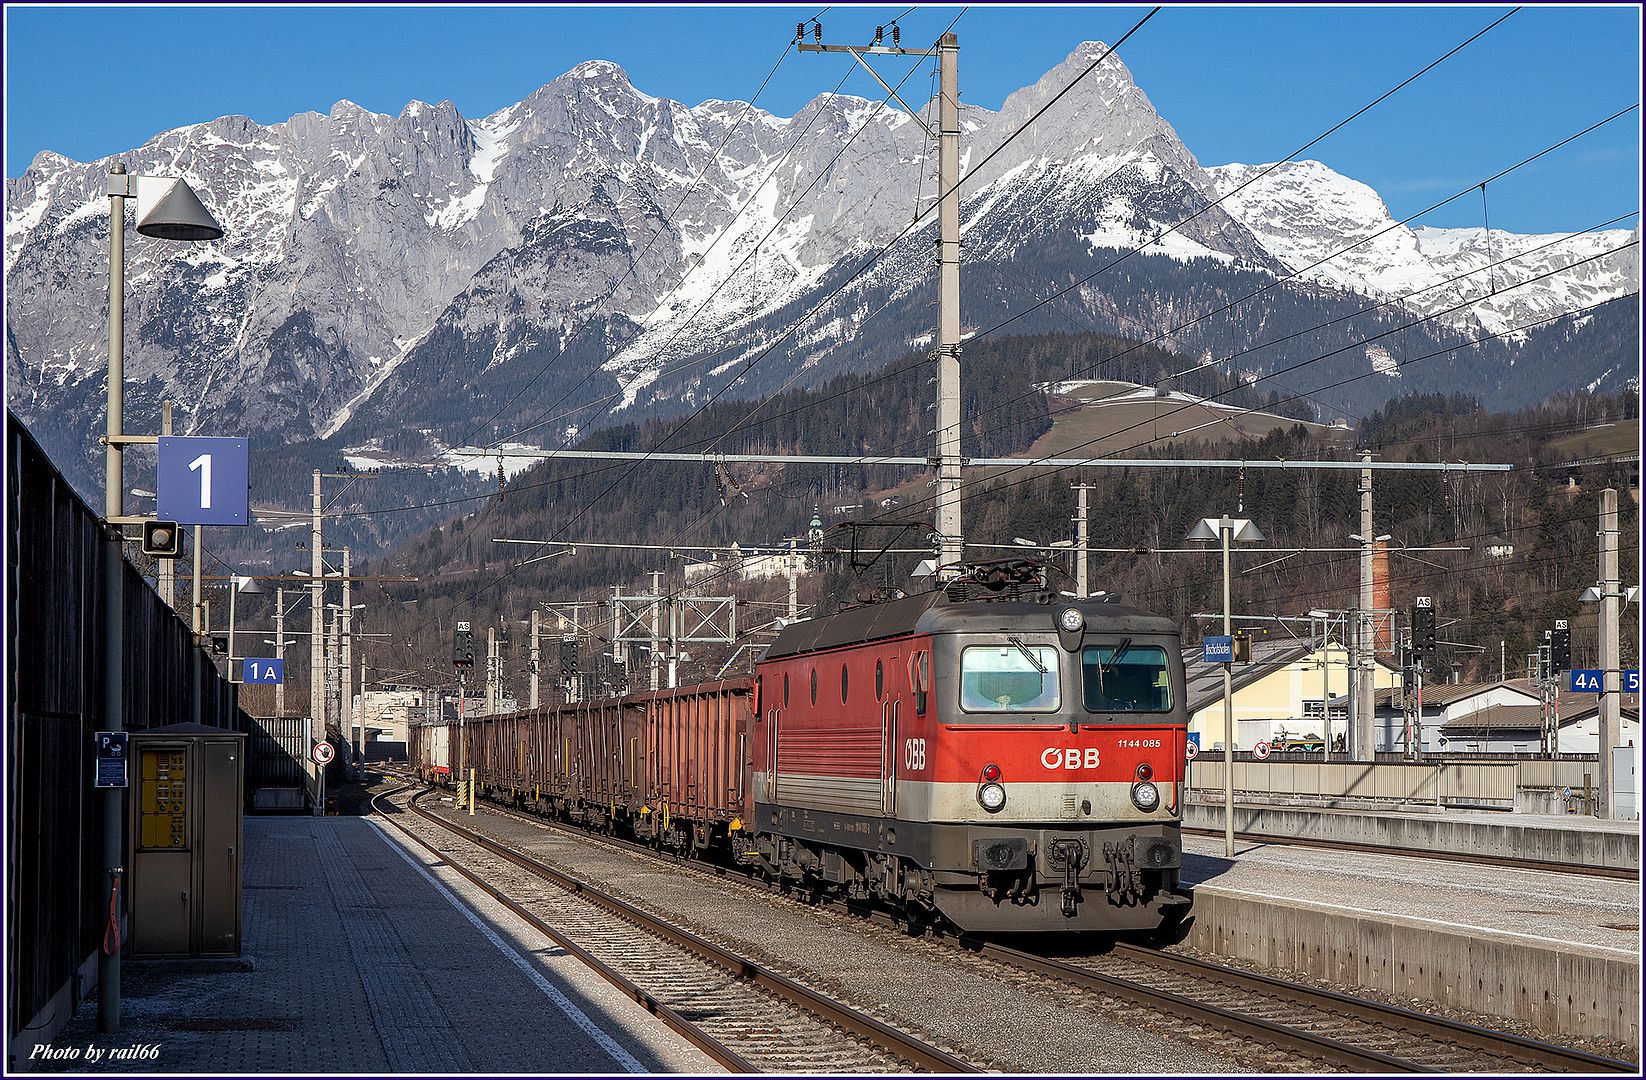 https://i51.photobucket.com/albums/f385/rail66_1/westbahn/salzburg/200/200_03_00052_zpsfqpbb2se.jpg